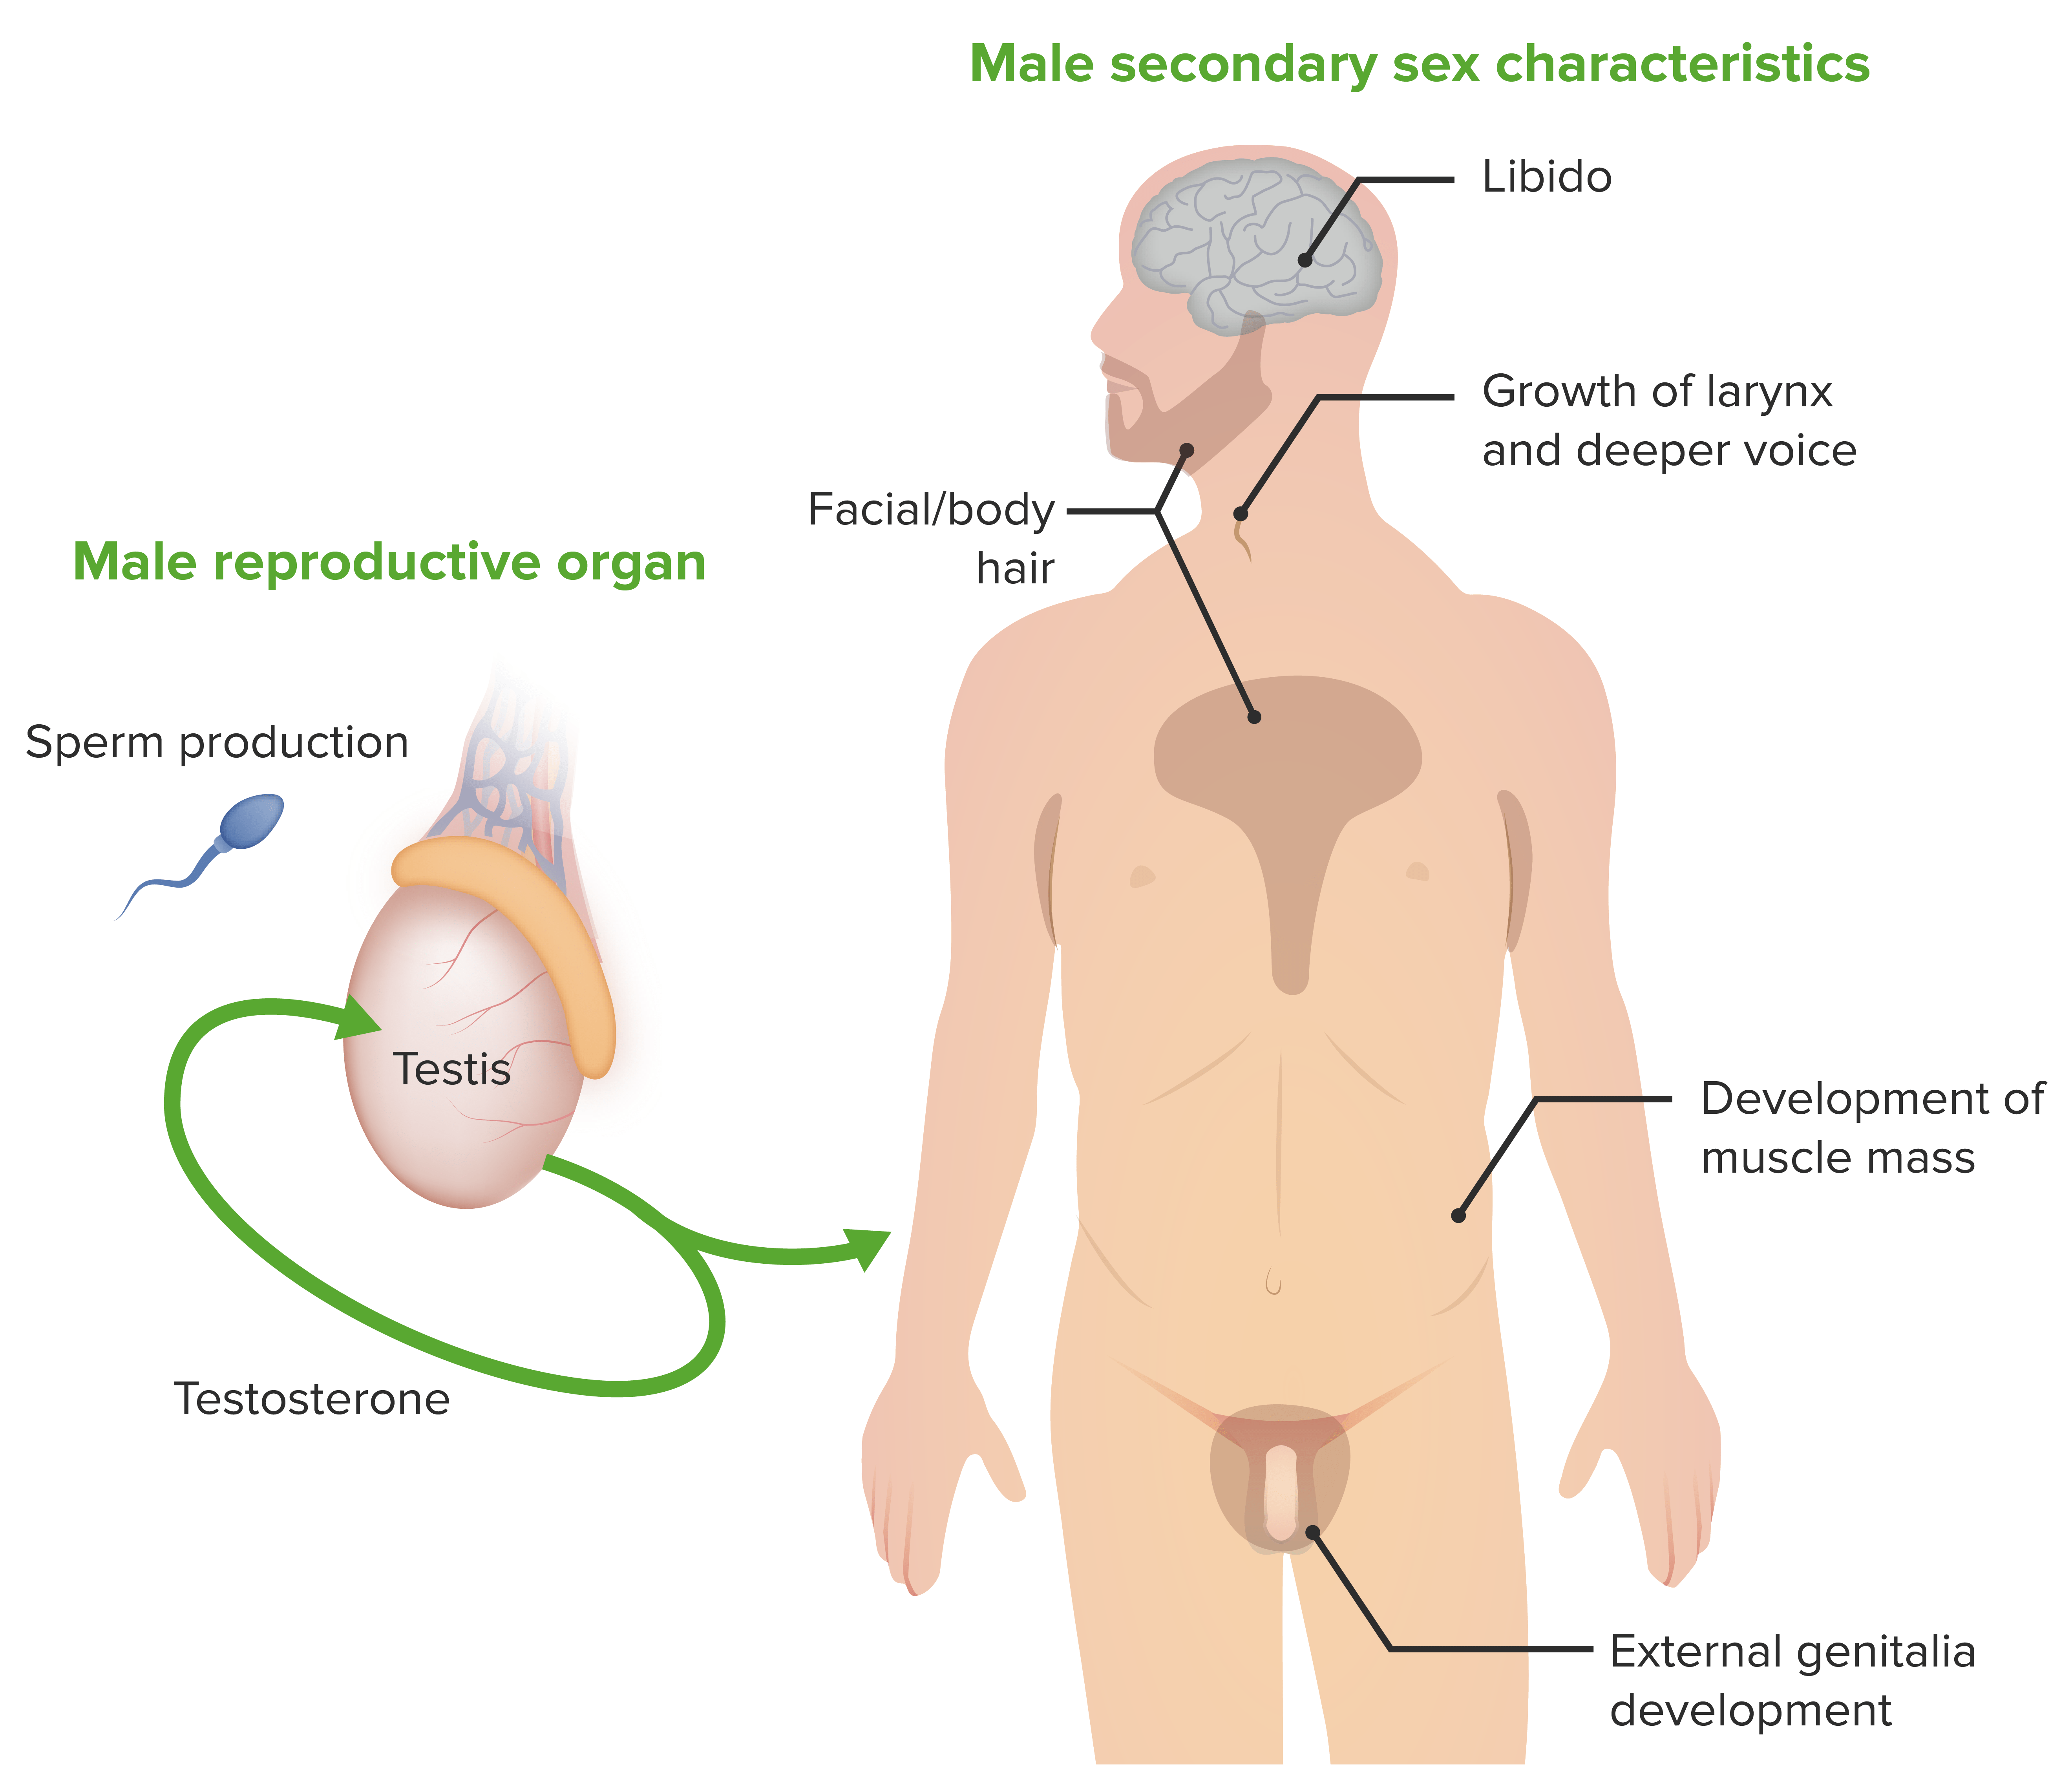 Male secondary sex characteristics